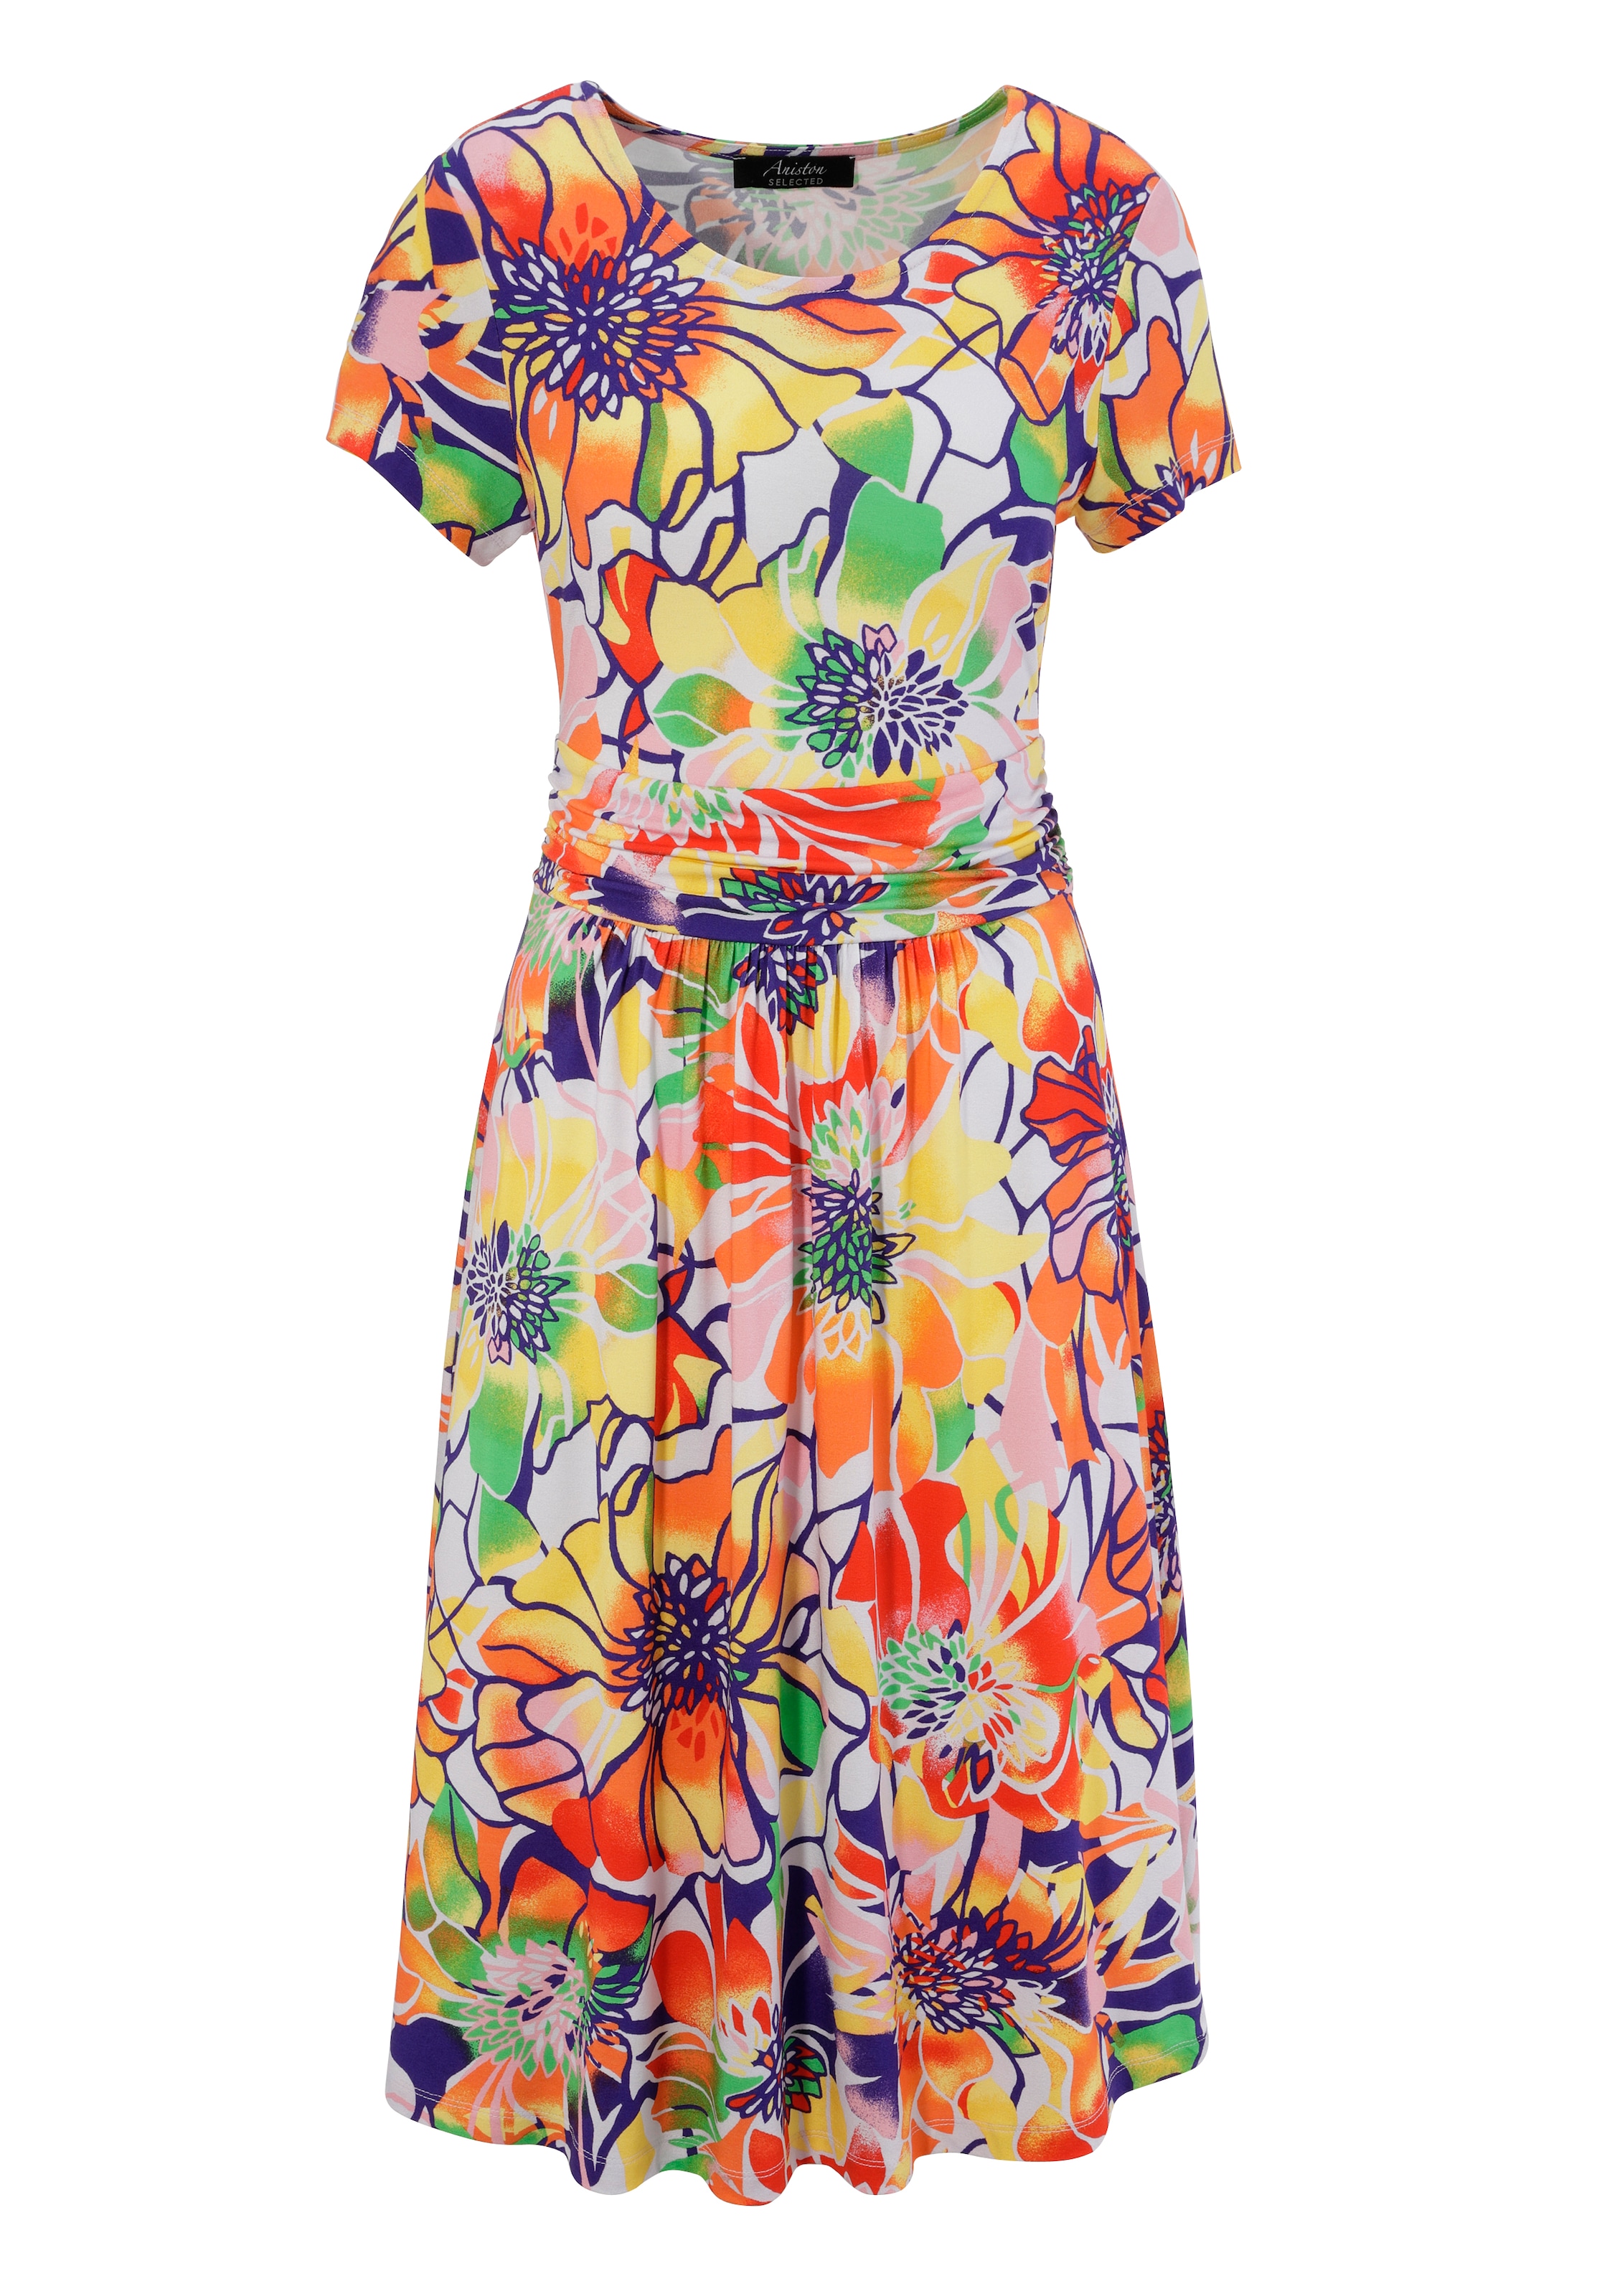 Aniston SELECTED Sommerkleid, mit farbenfrohem Blumendruck